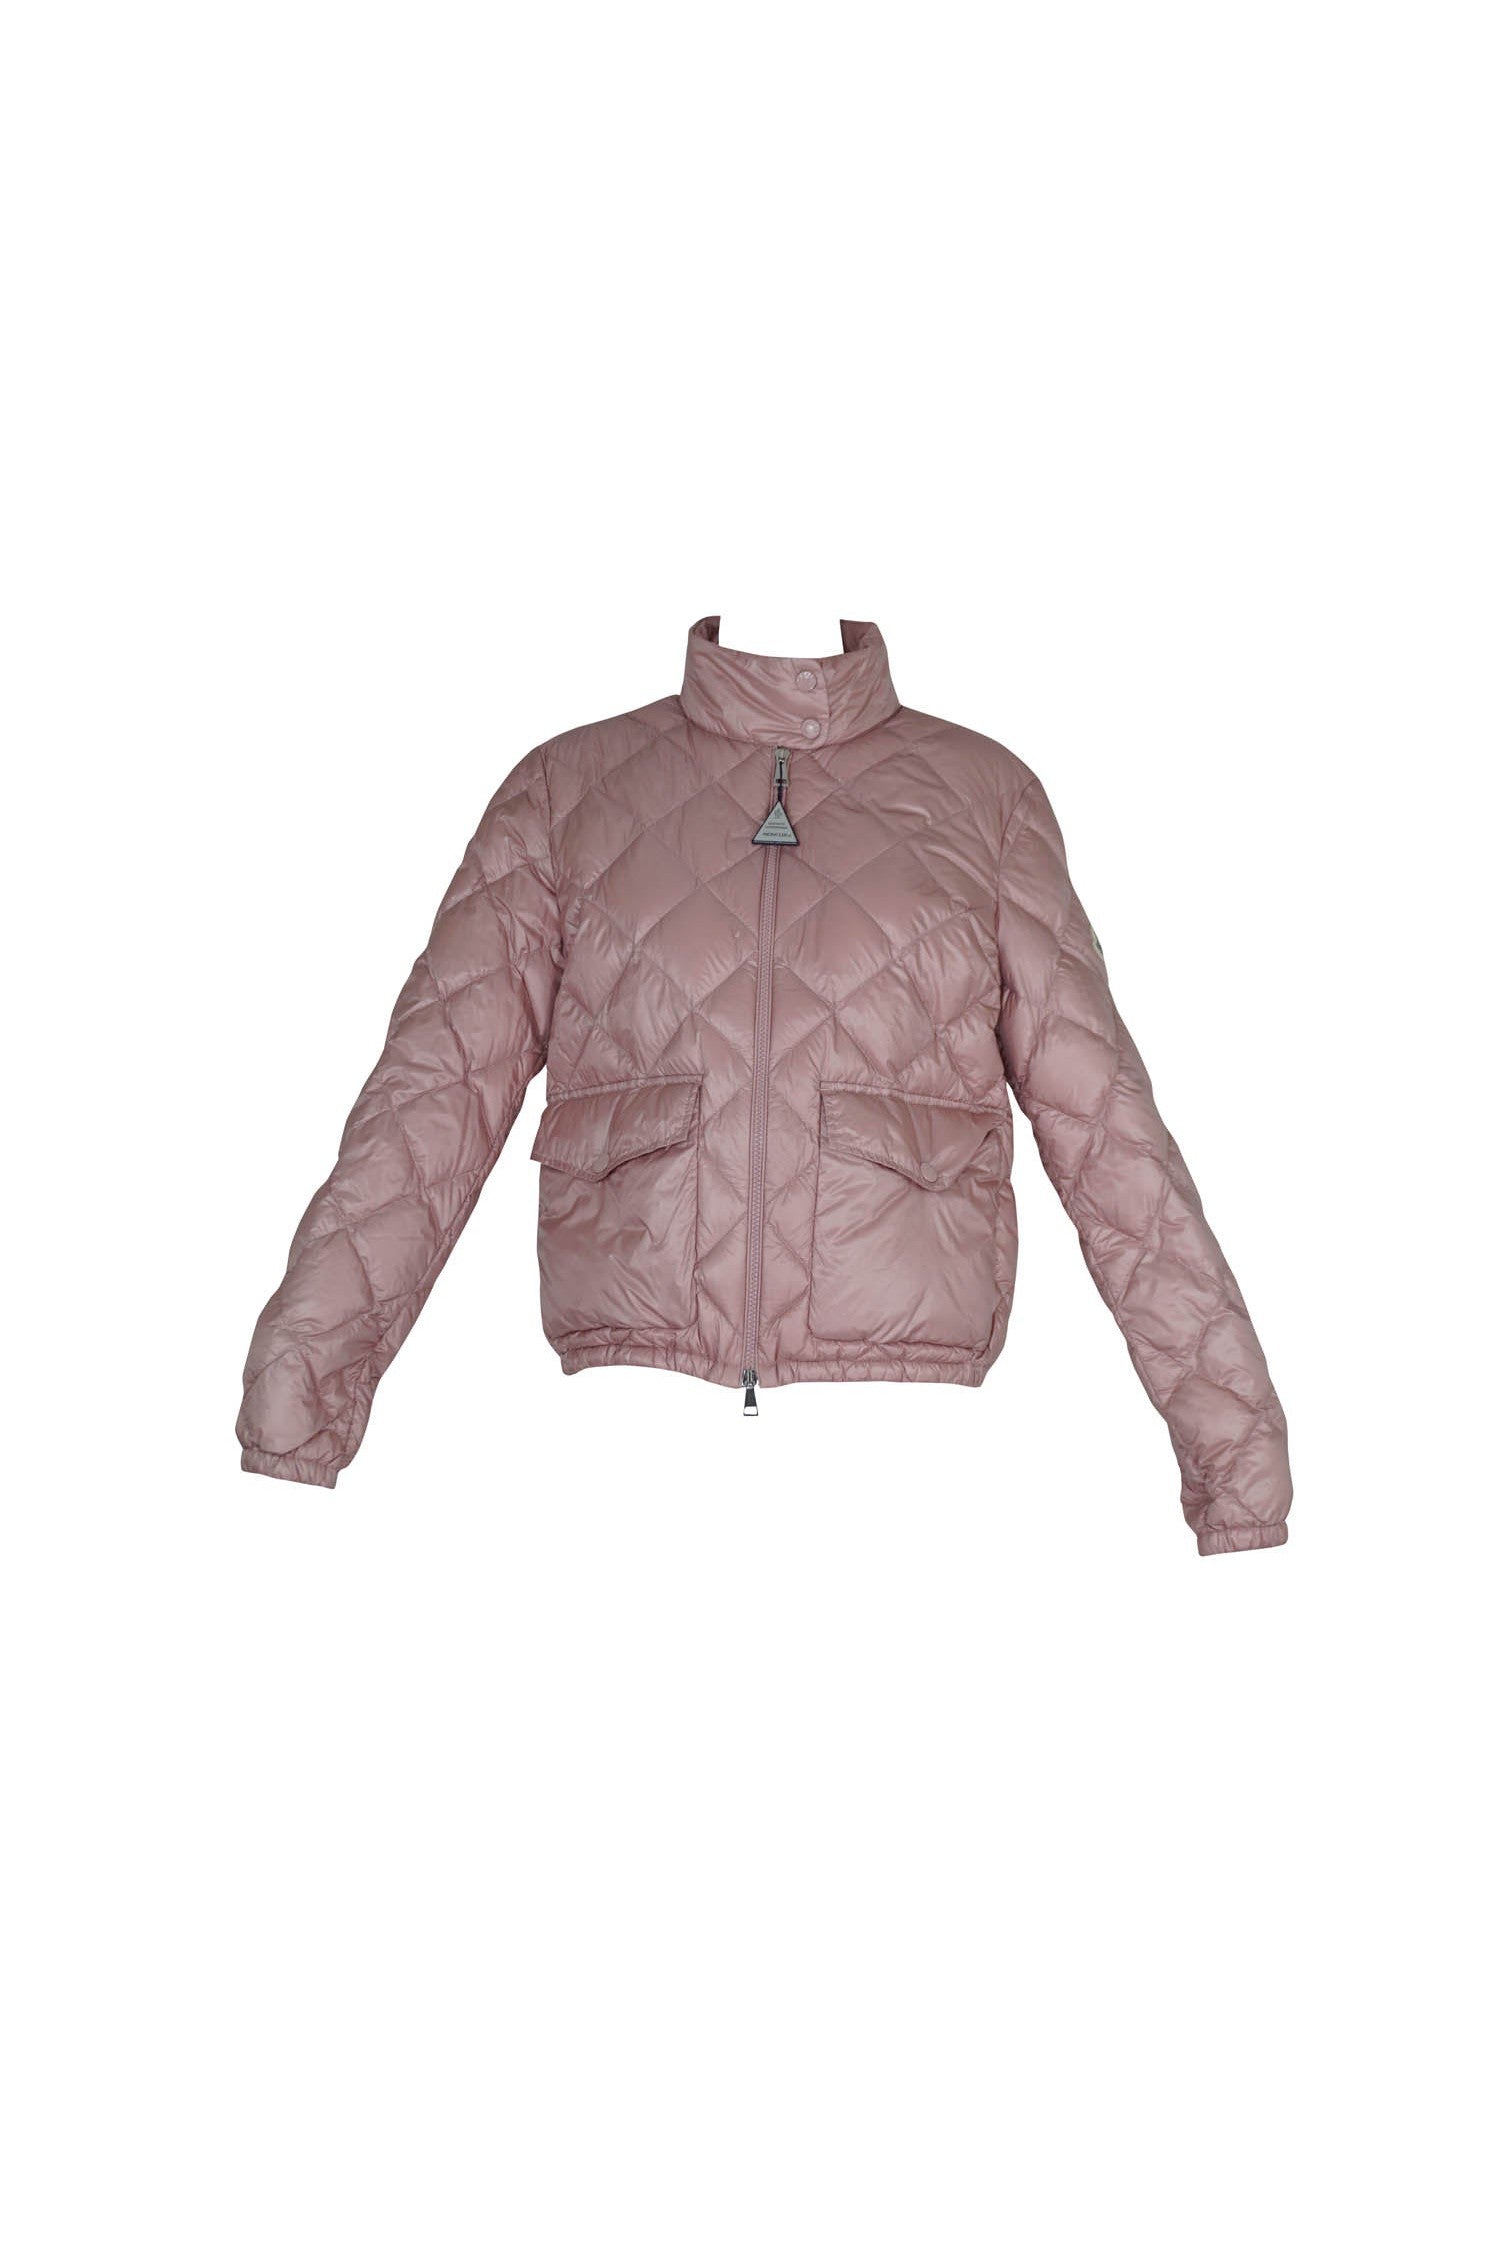 Moncler Dusty Rose Technical Zip Jacket Sz 3/Medium - Foxy Couture Carmel